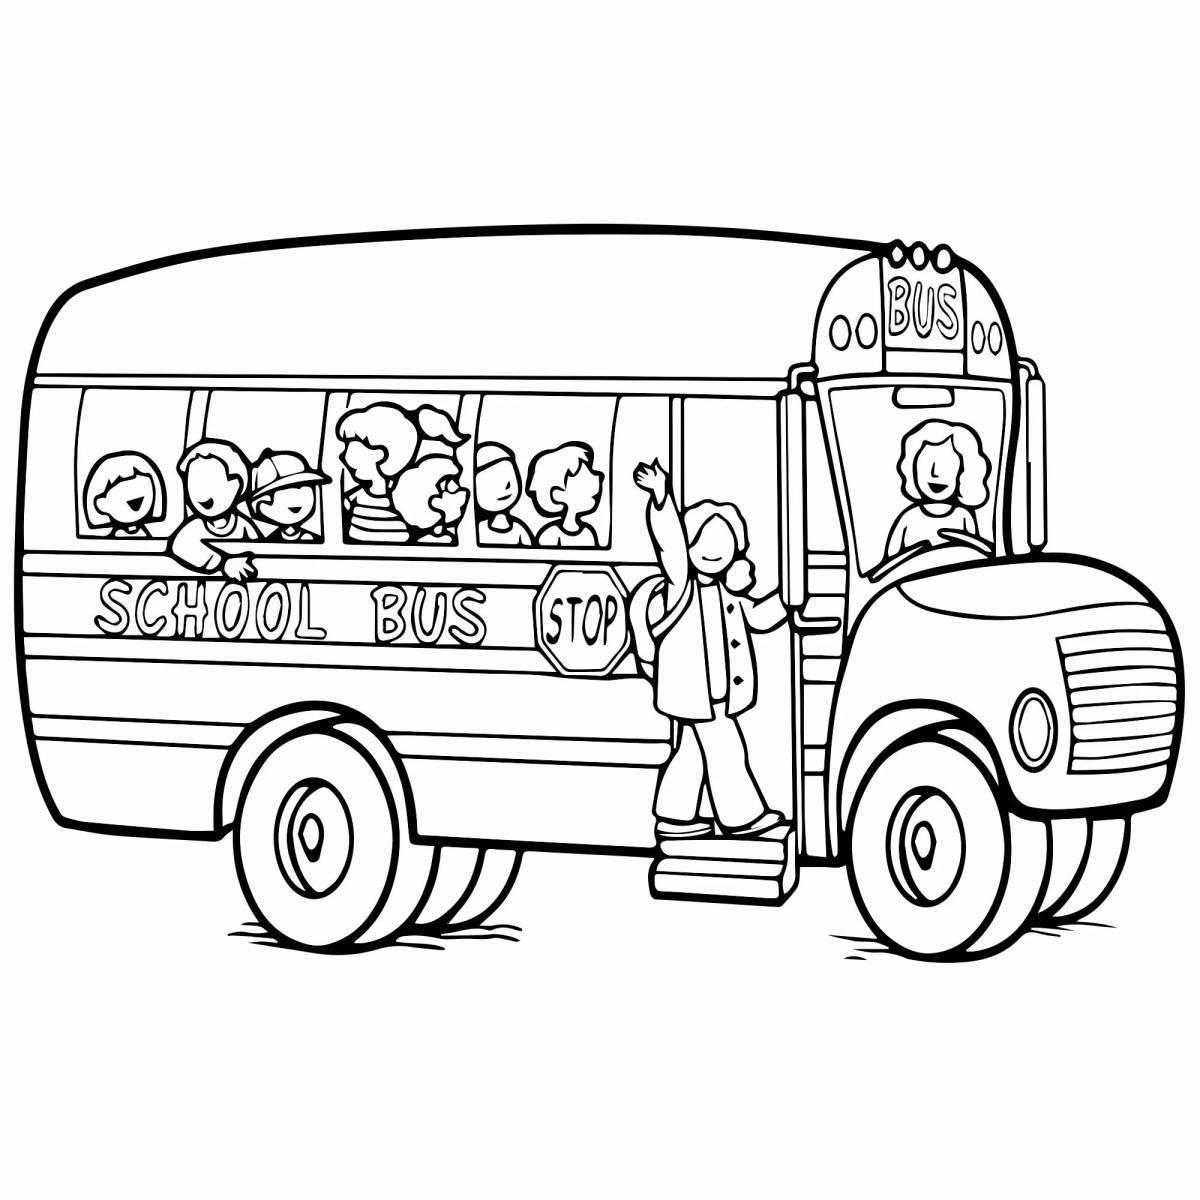 School bus #6